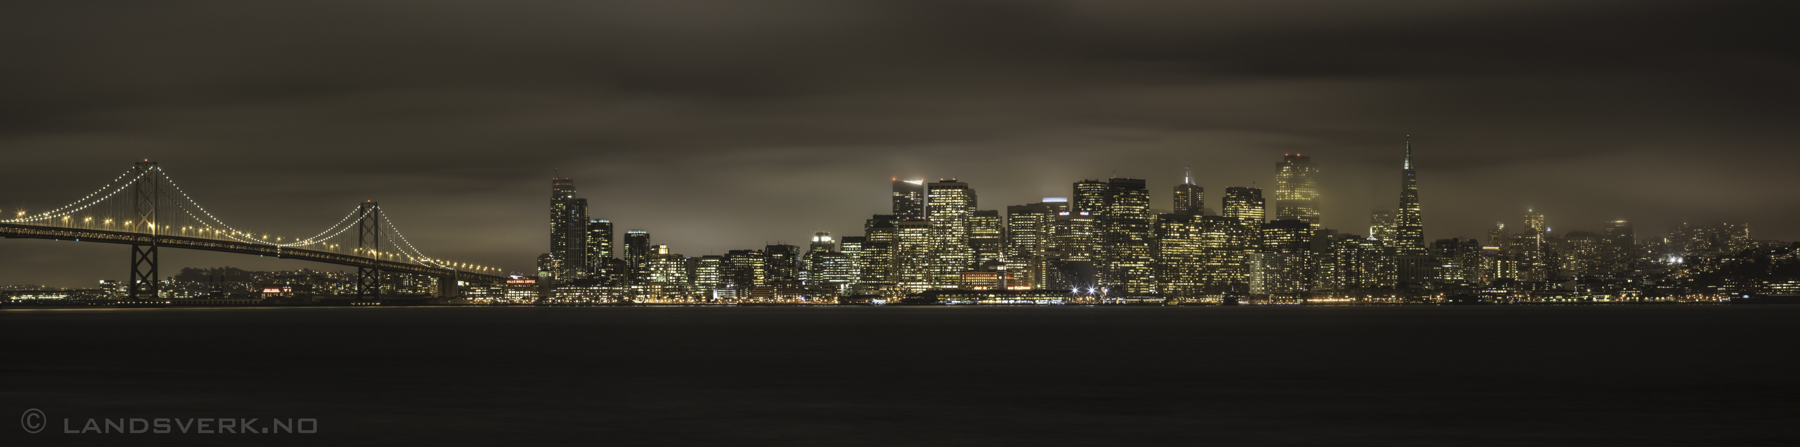 San Francisco, California. 

(Canon EOS 5D Mark III / Canon EF 70-200mm f/2.8 L IS II USM)